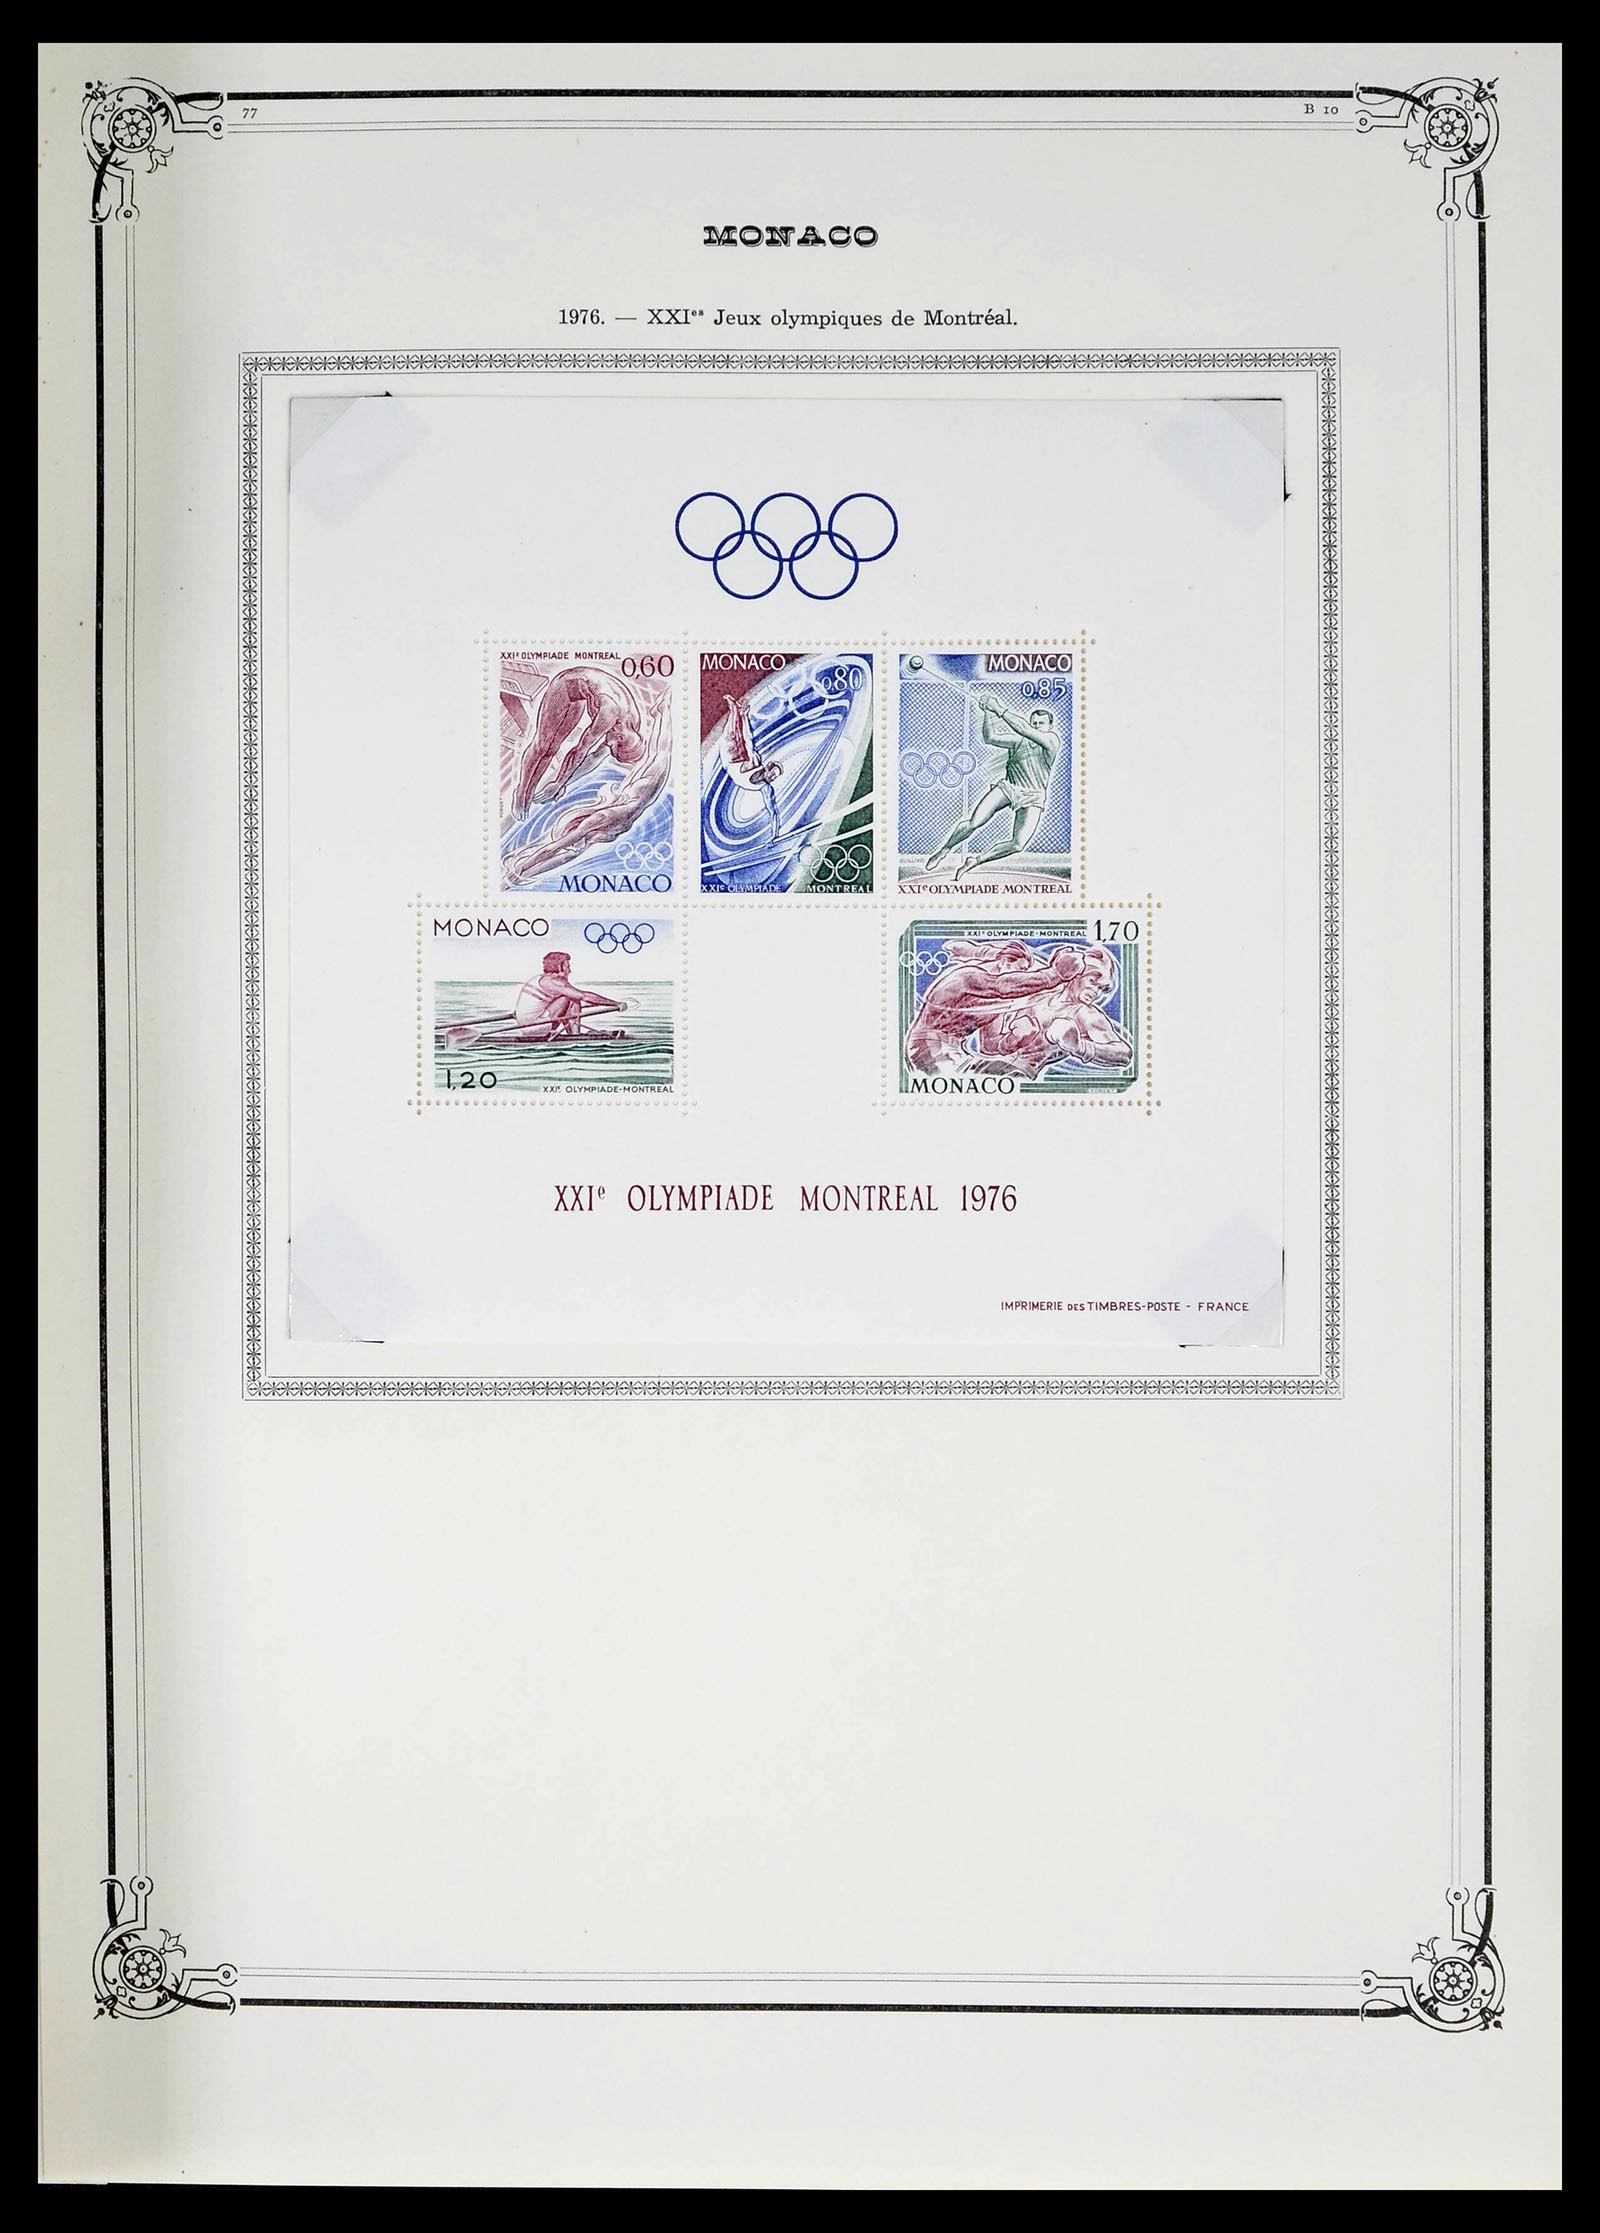 39133 0204 - Stamp collection 39133 Monaco 1885-1996.